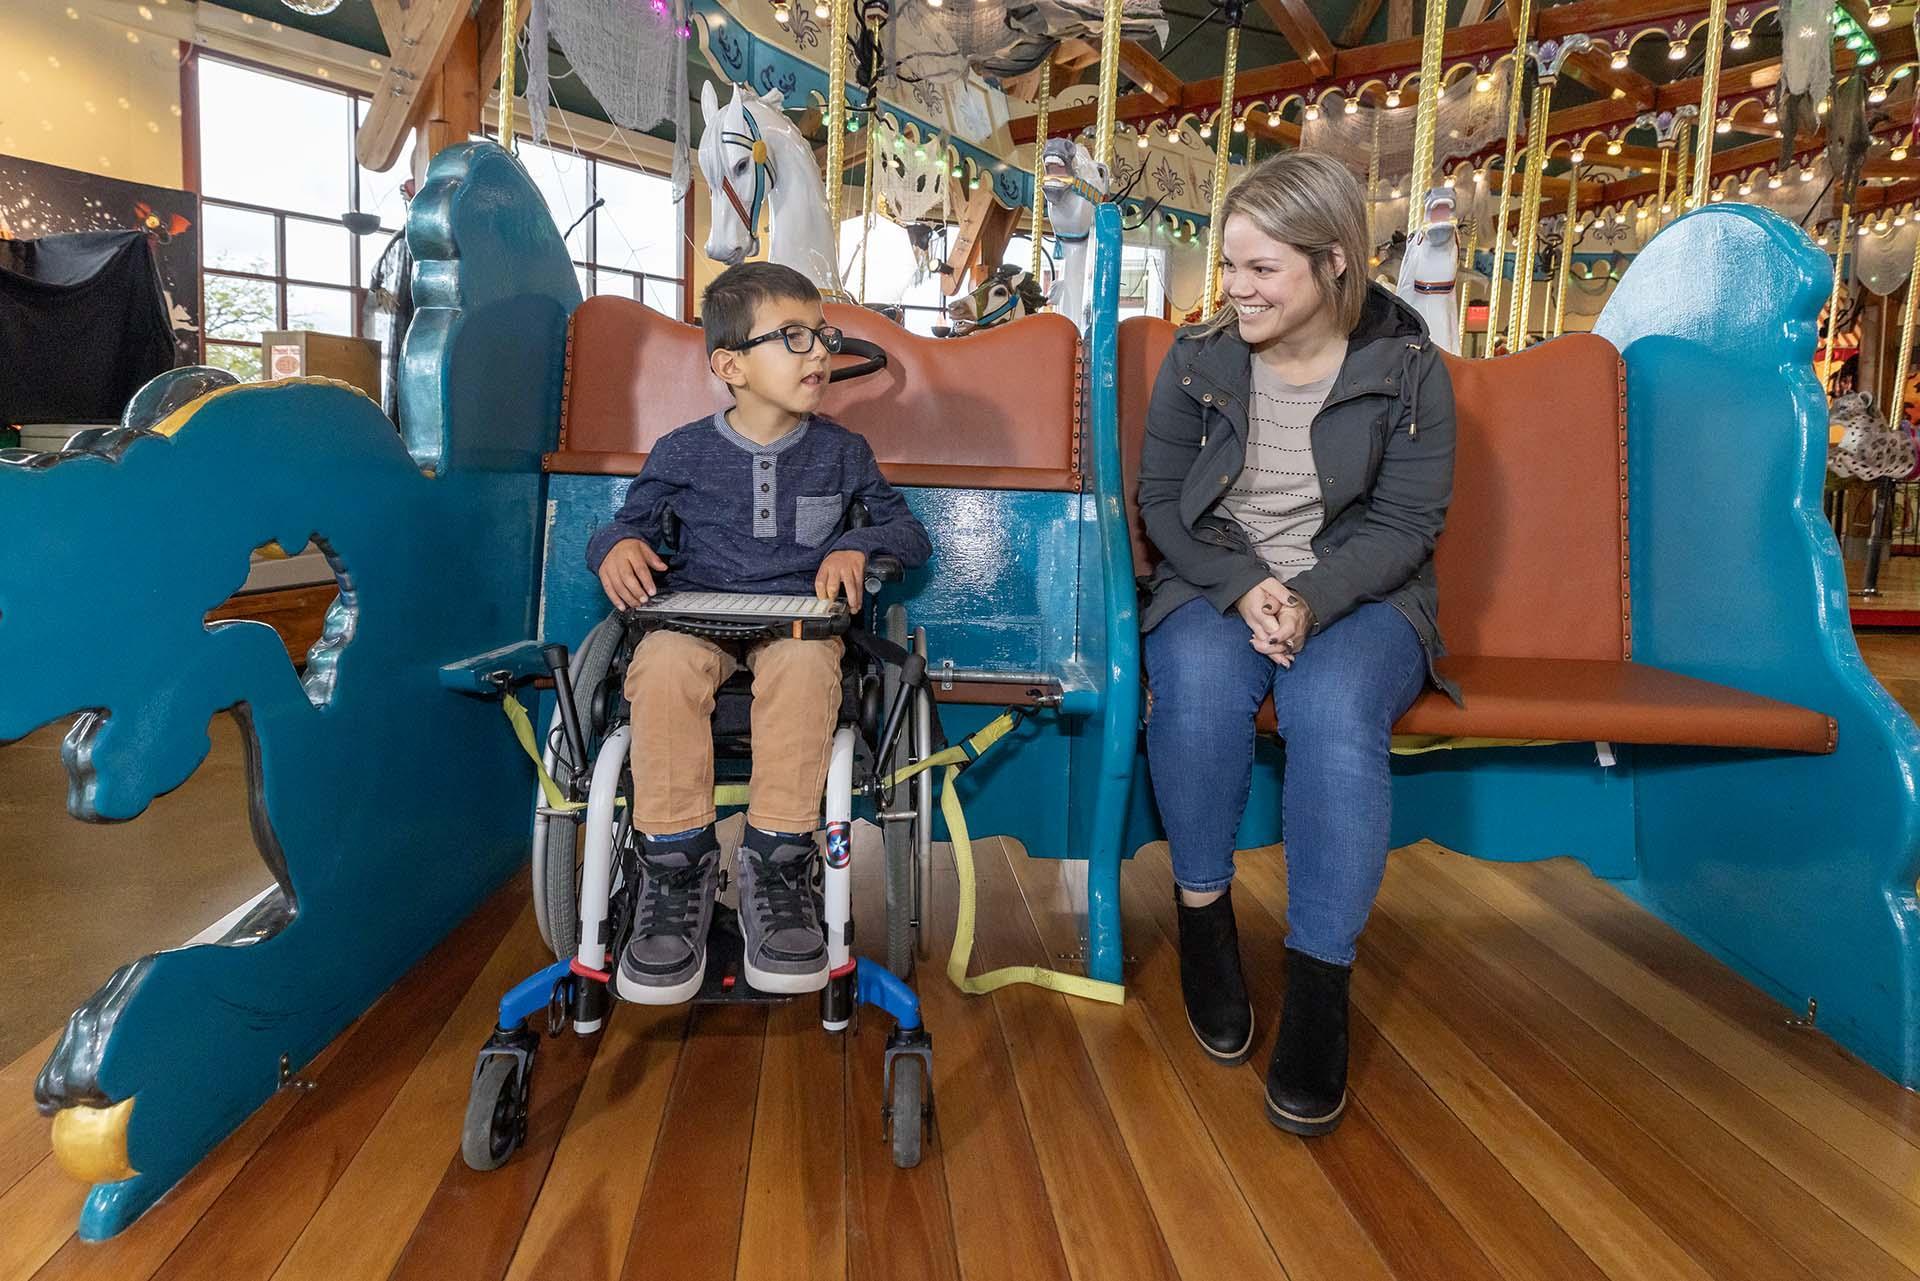 Accessible fun at the Silver Beach Carousel